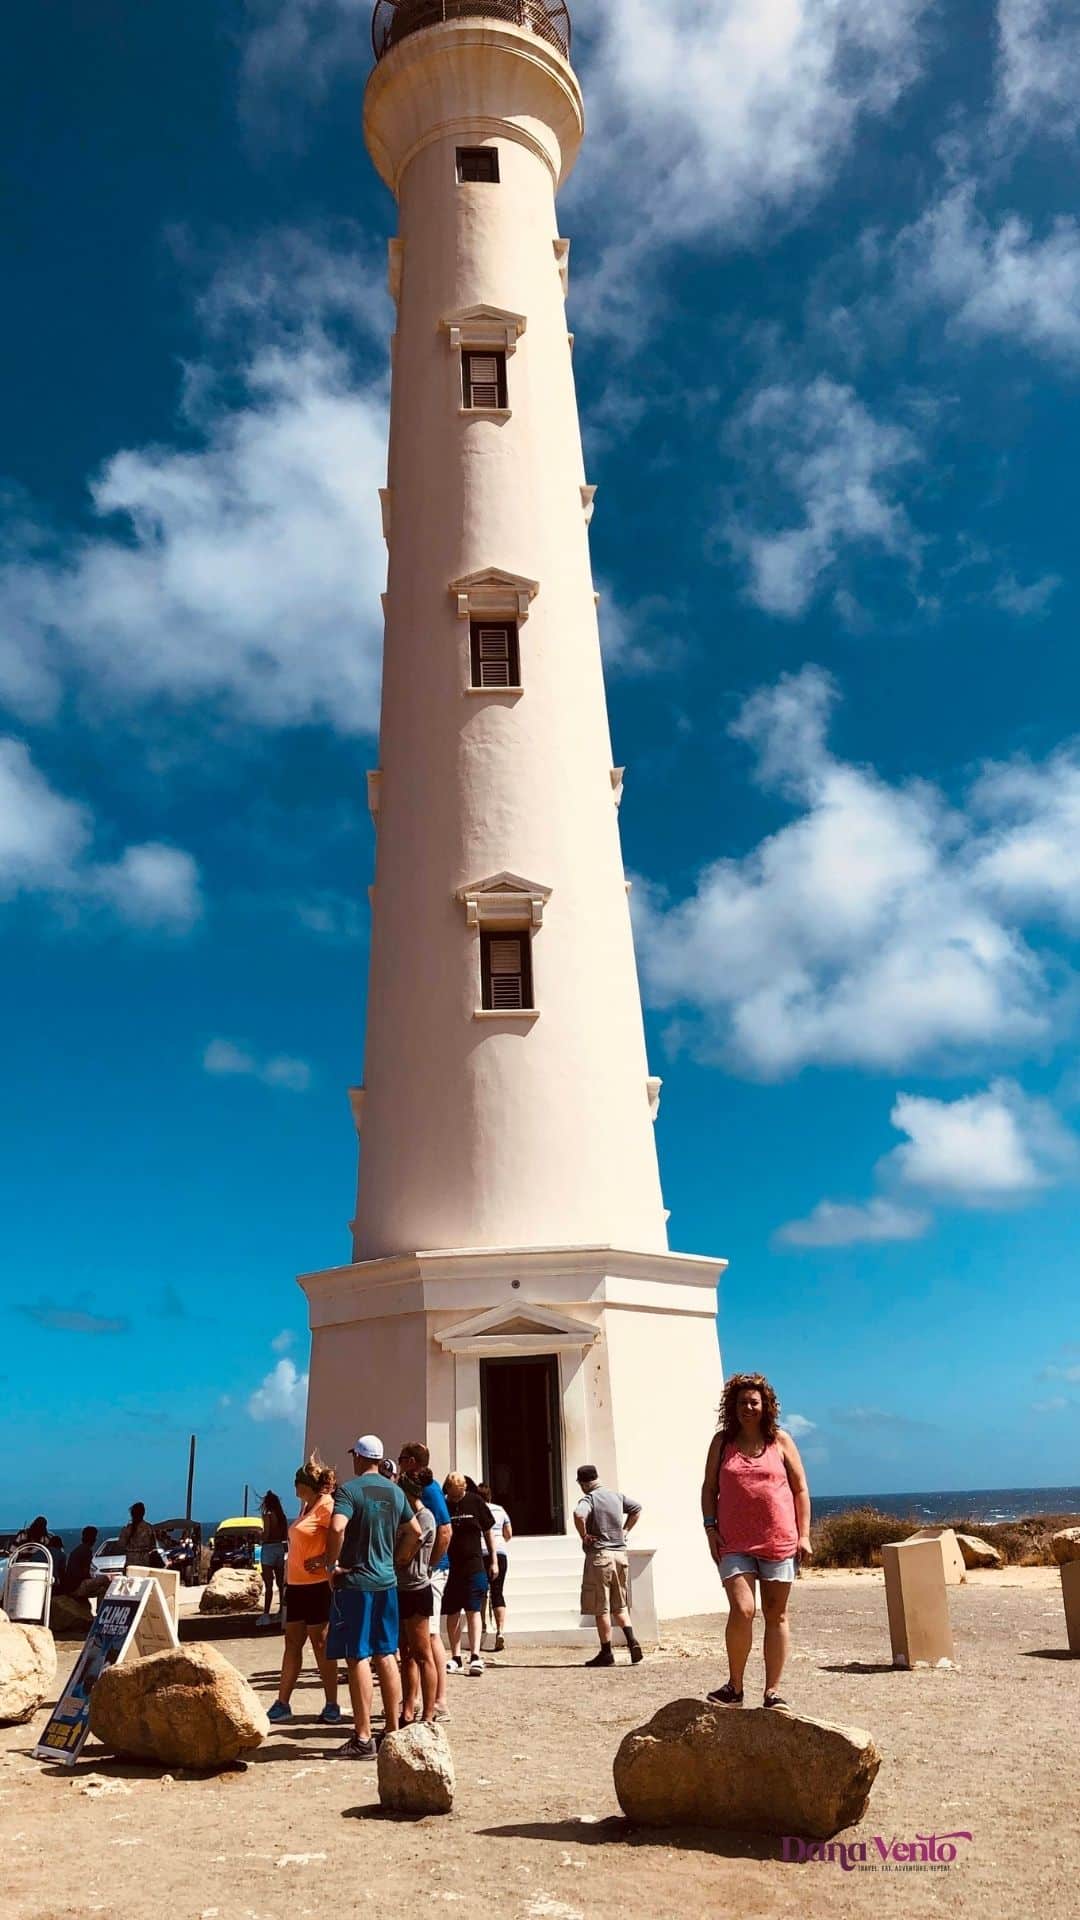 The California Lighthouse and Dana Vento